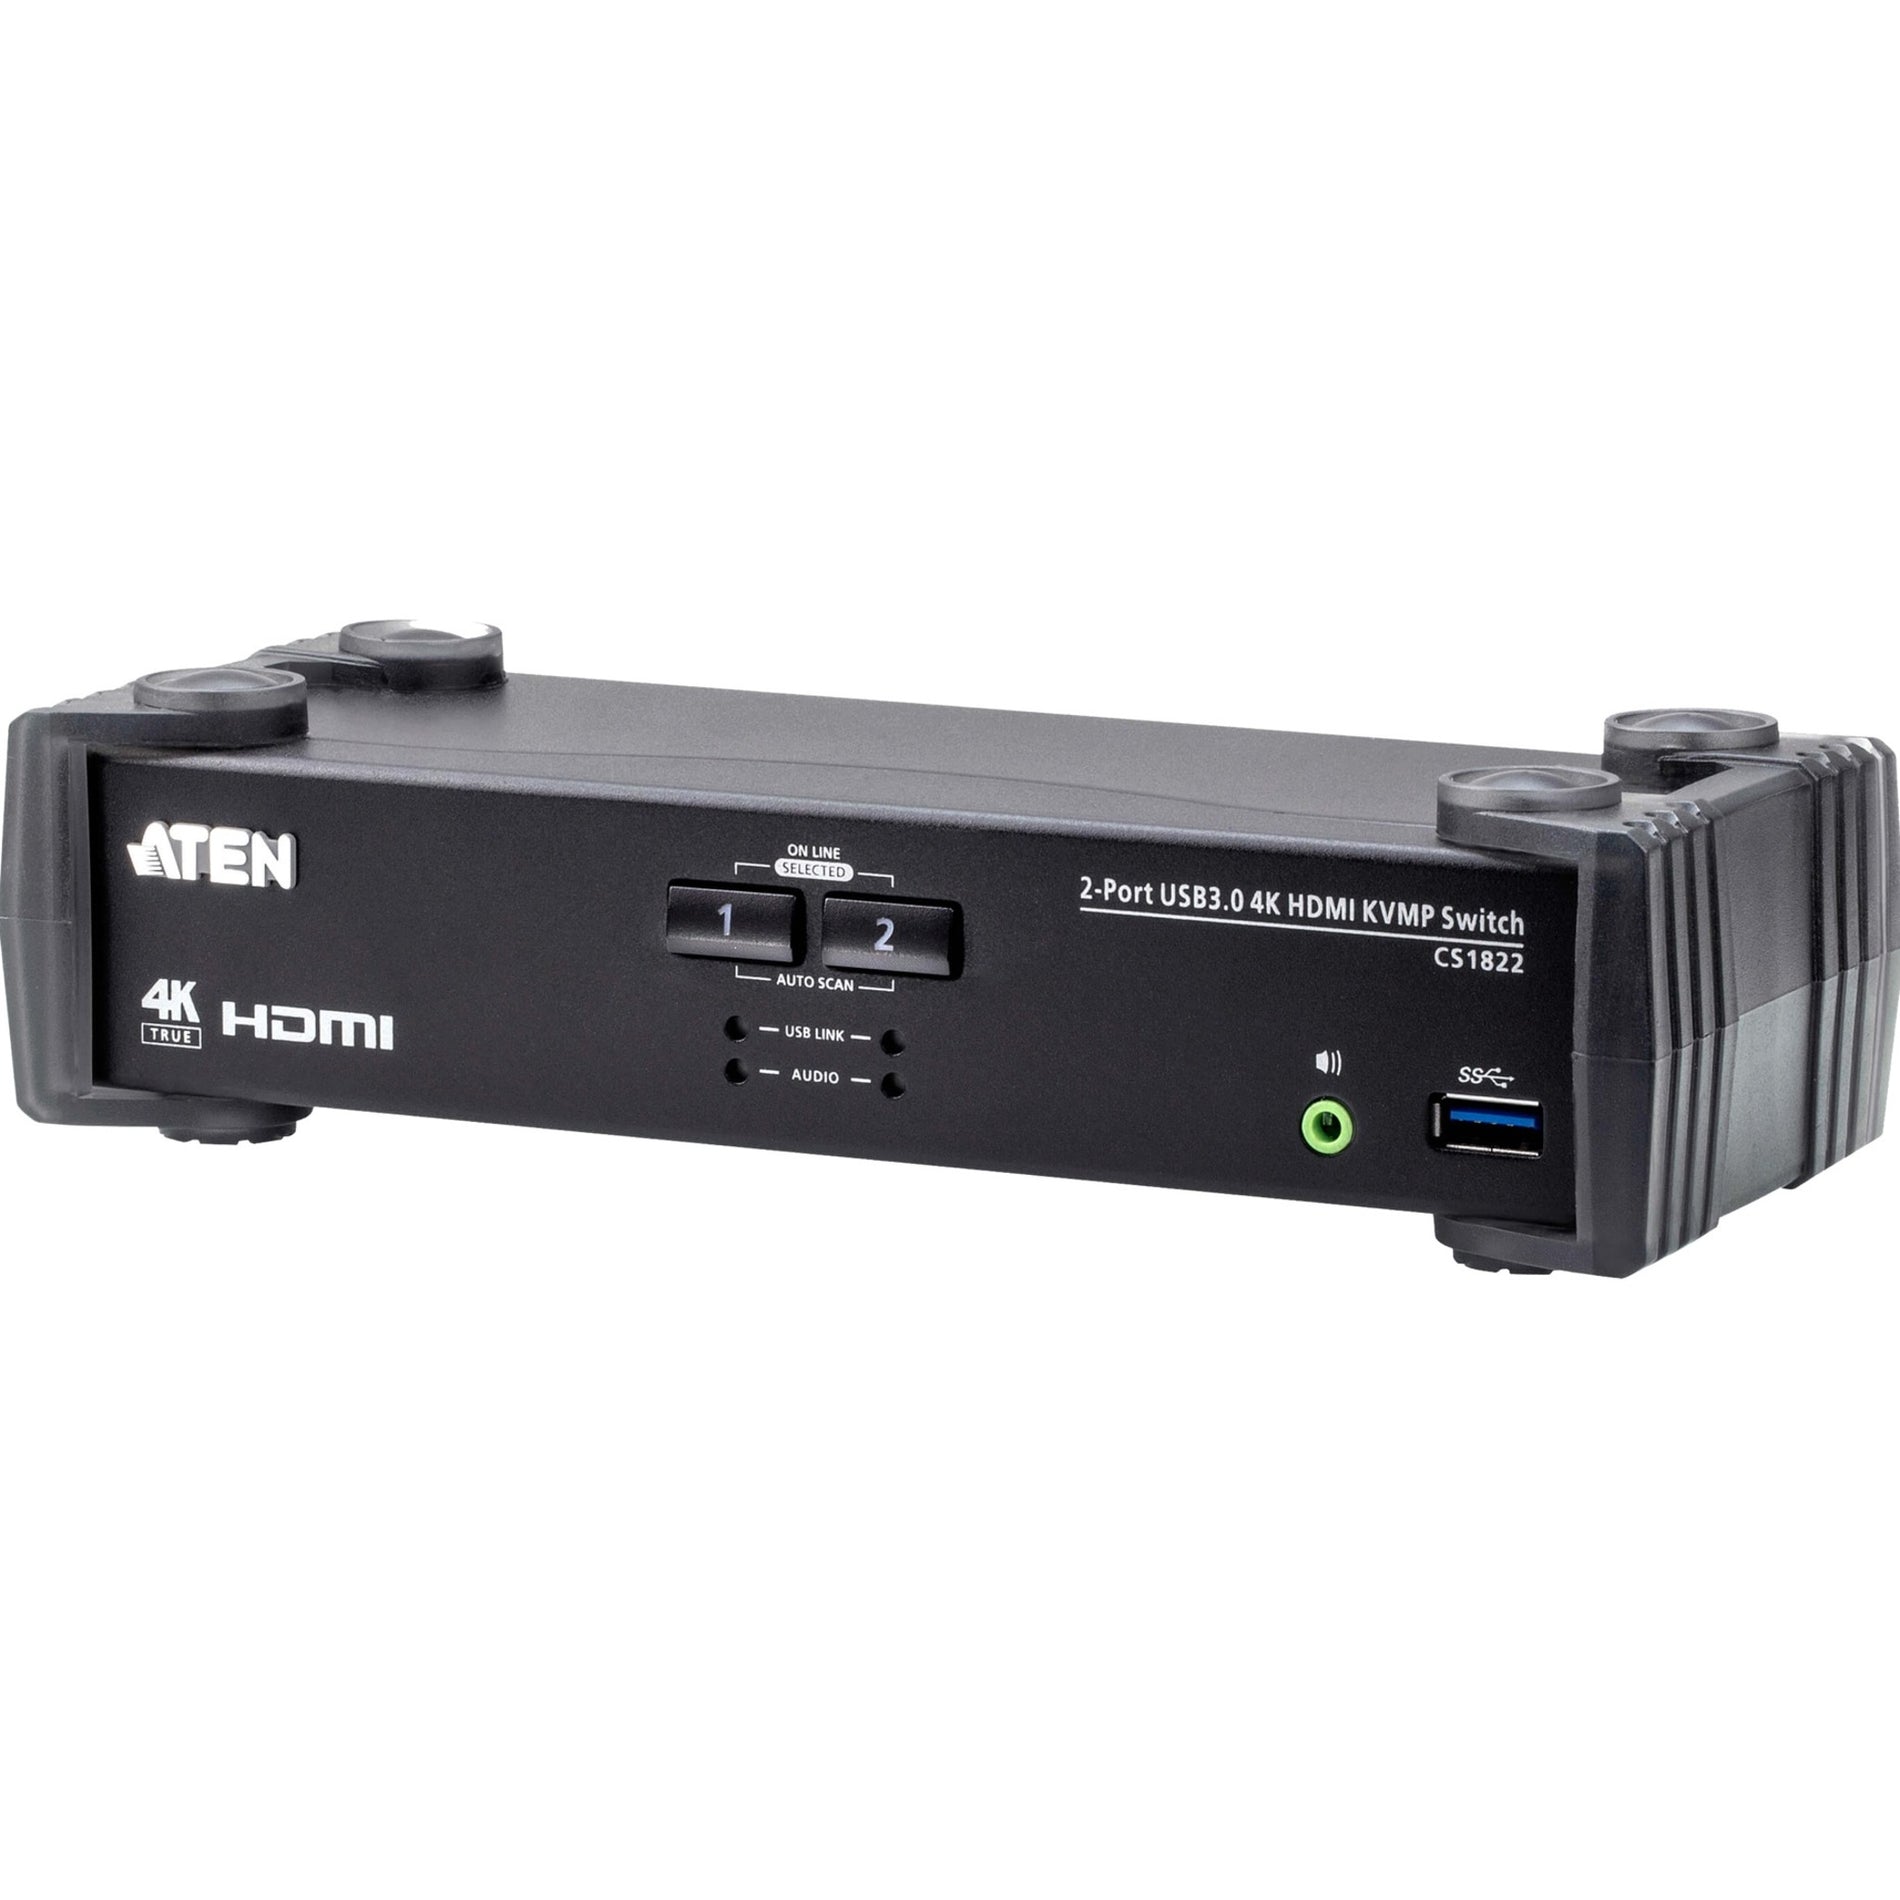 ATEN CS1822 2-Port USB 3.0 4K HDMI KVMP Switch, Maximum Video Resolution 4096 x 2160